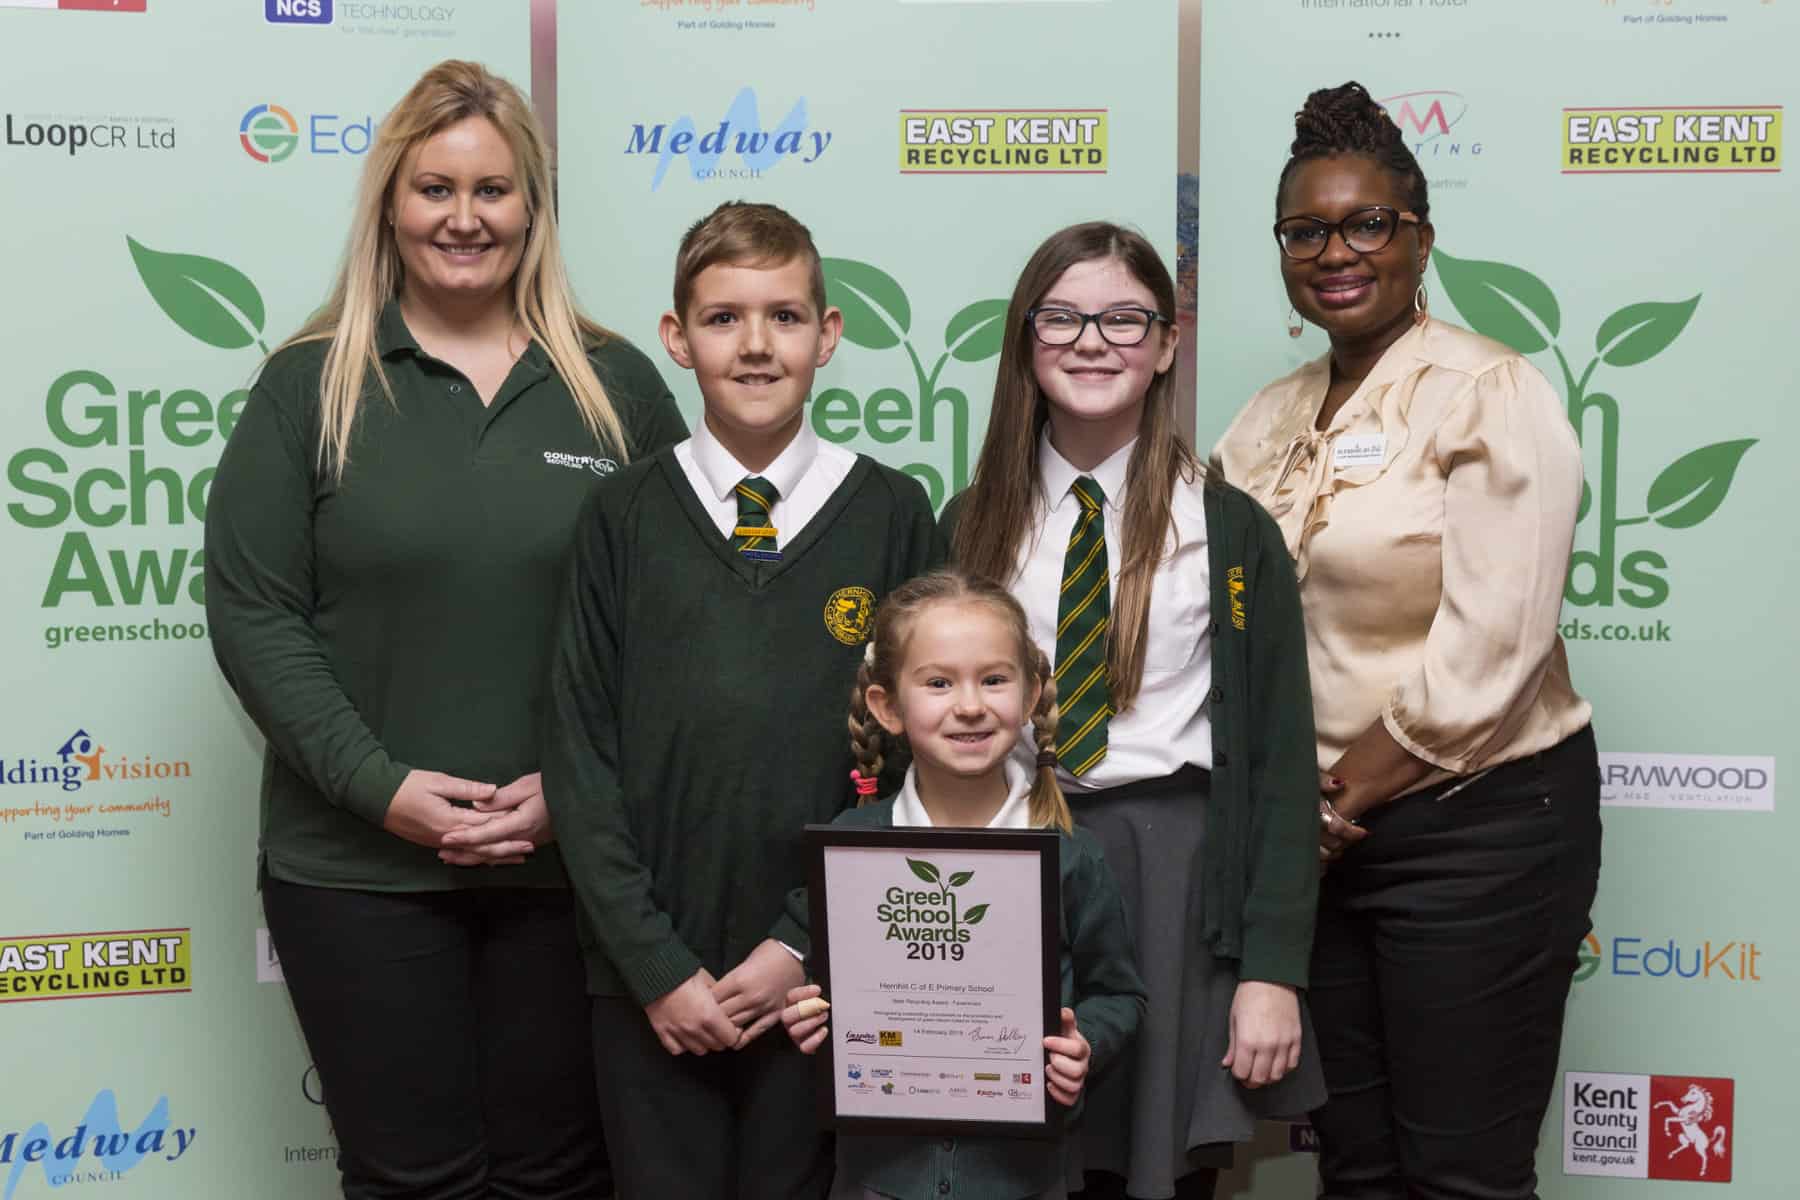 Awards praise eco-friendly schools